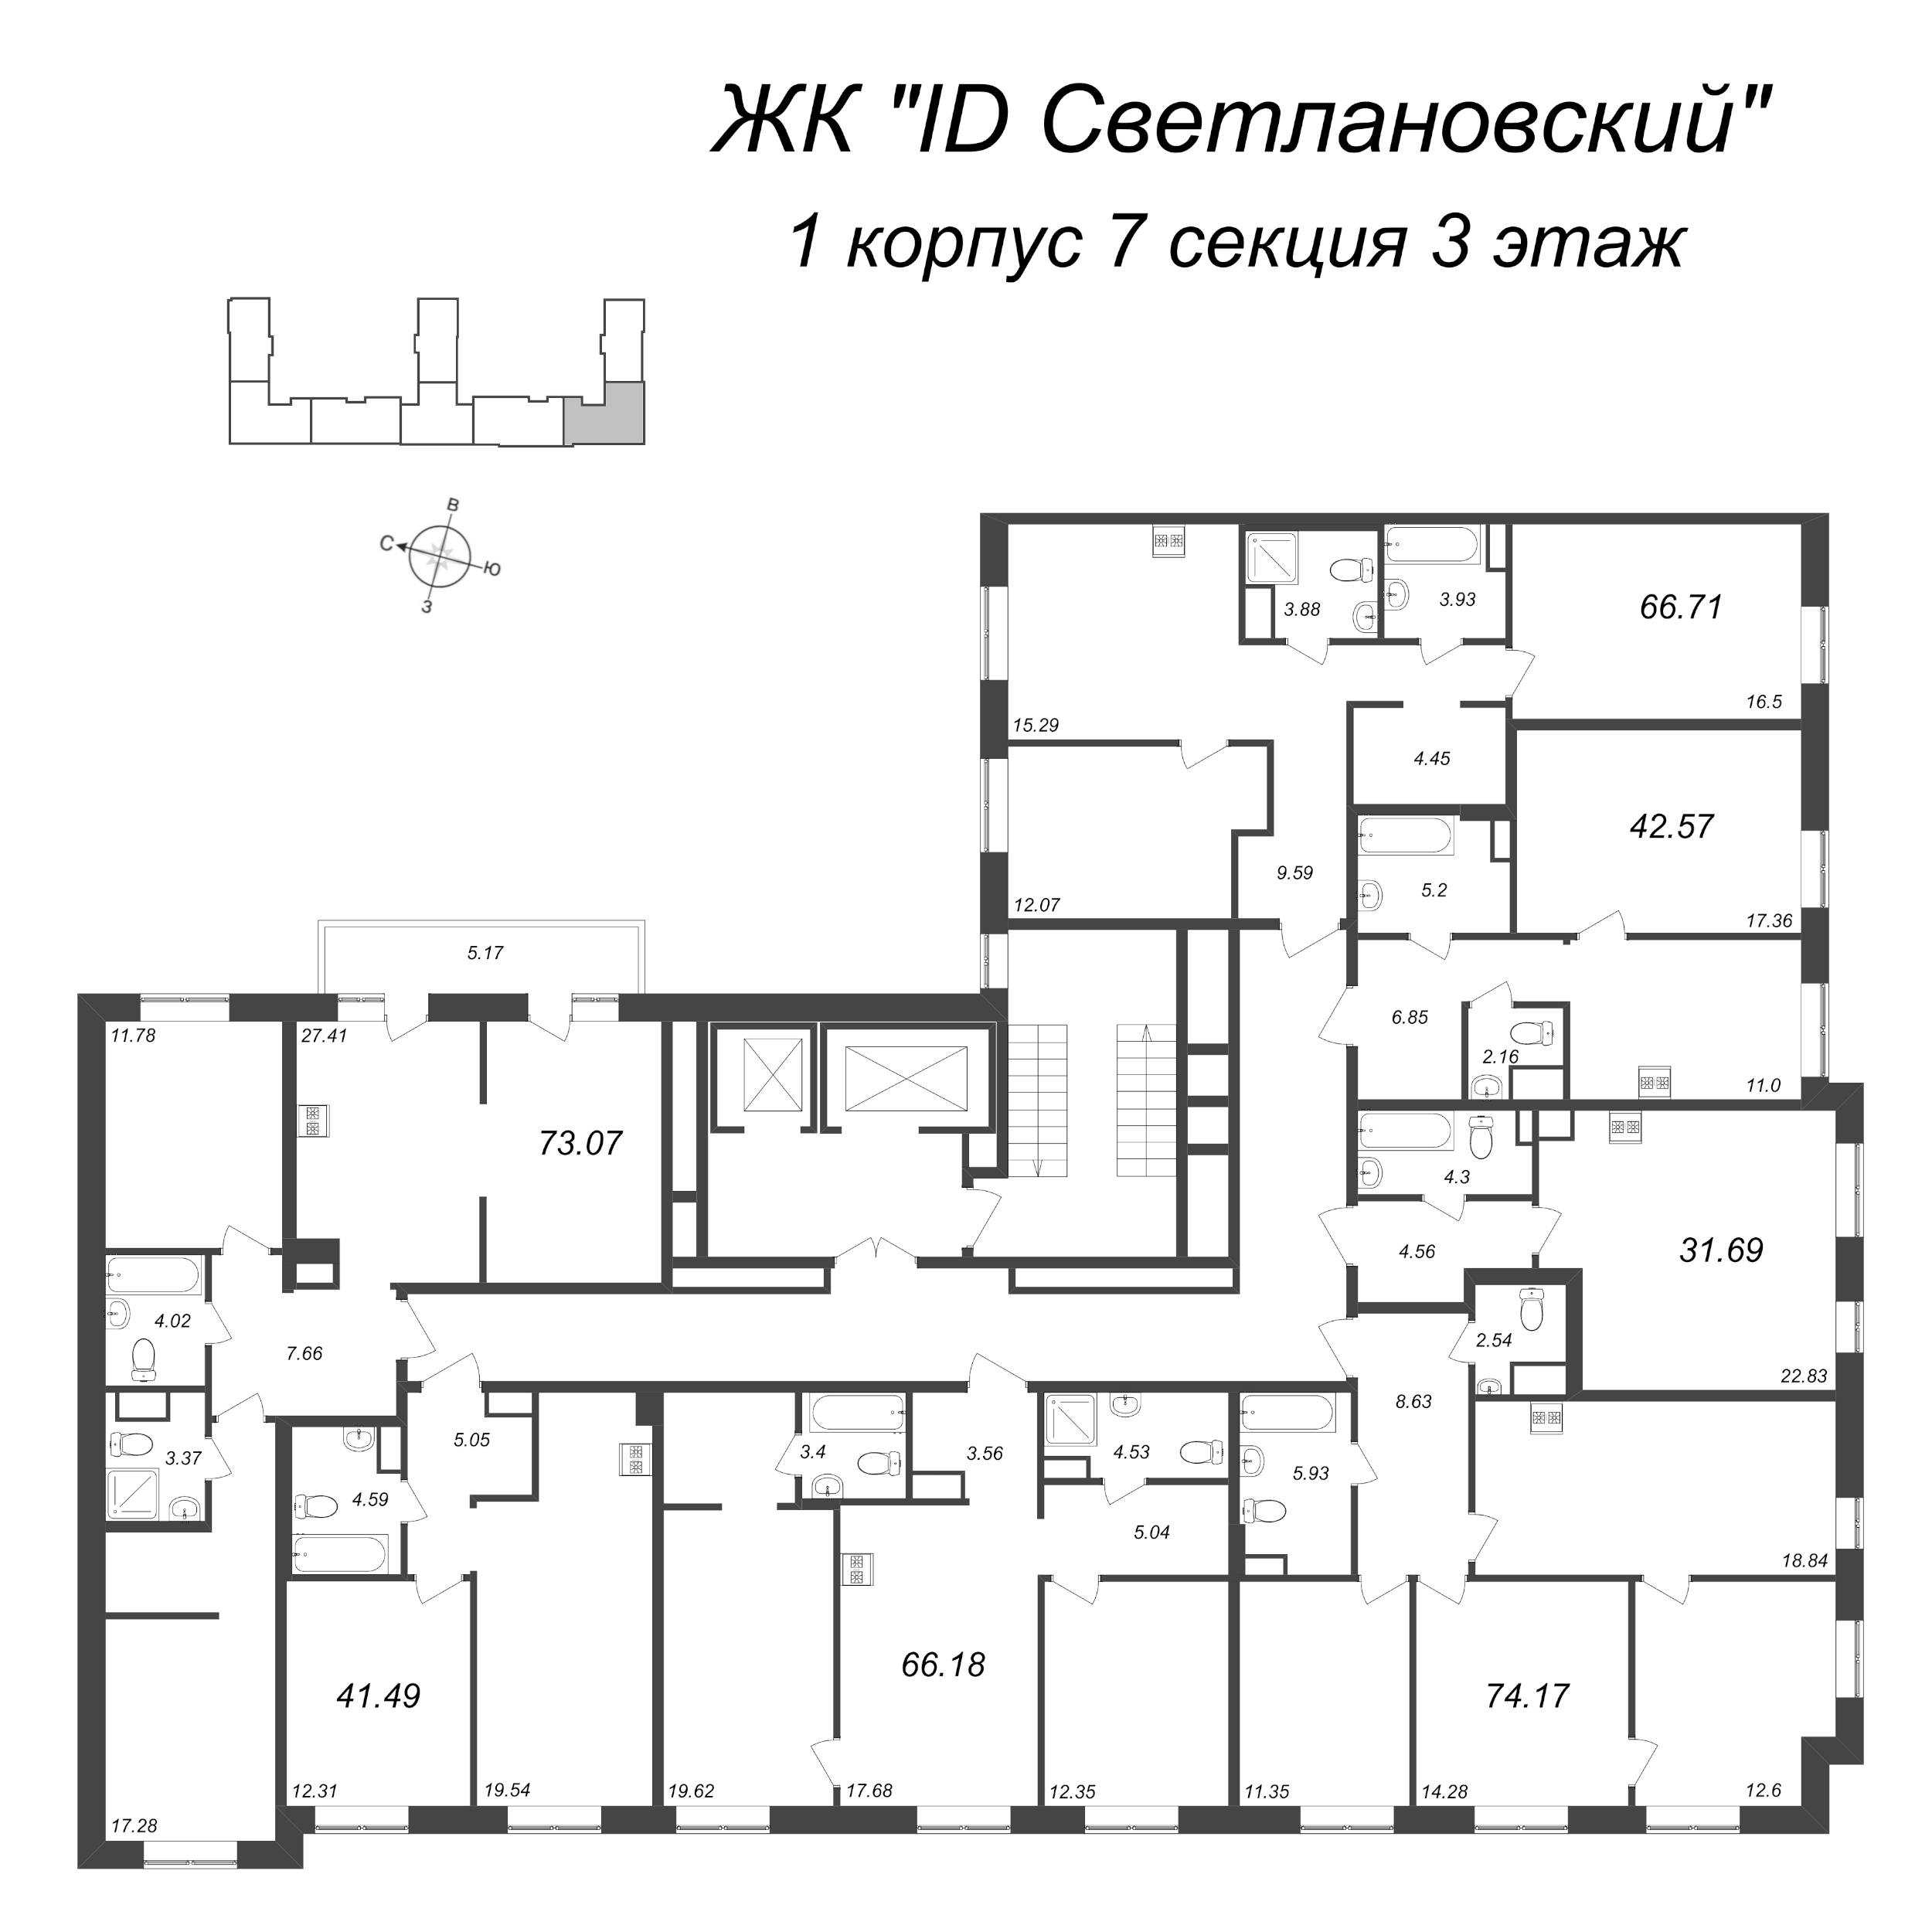 4-комнатная (Евро) квартира, 74.17 м² - планировка этажа